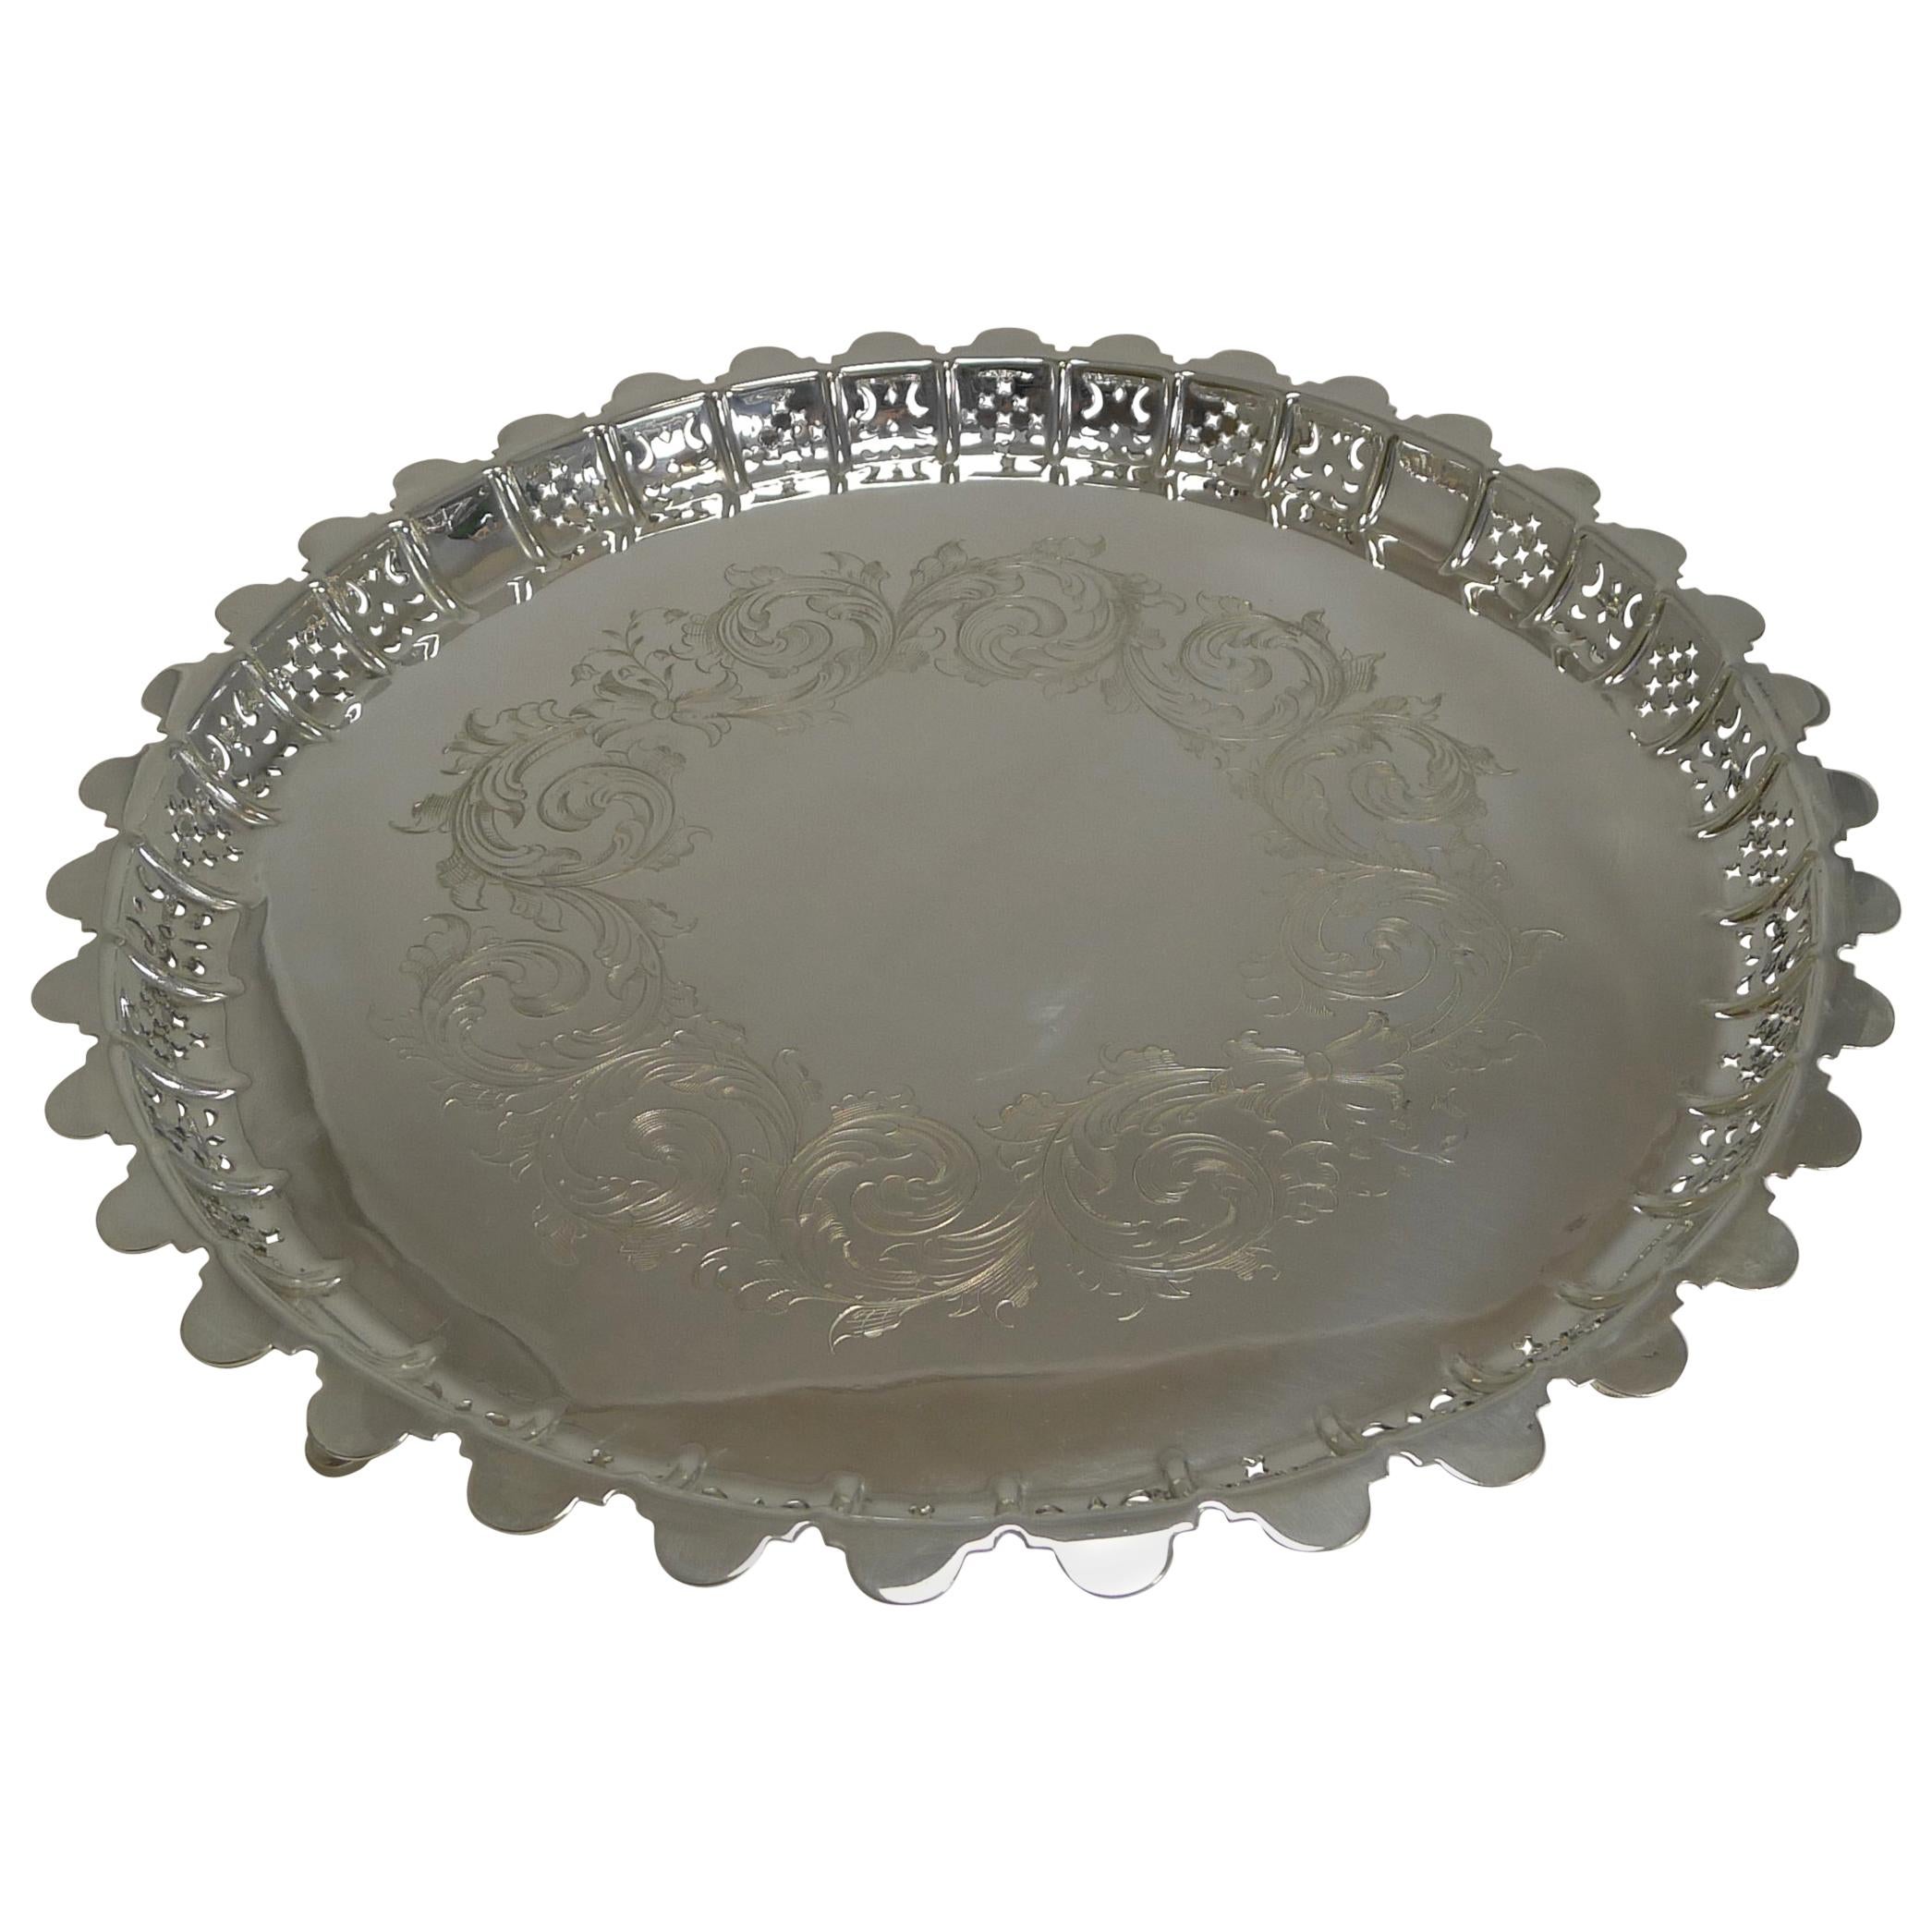 Large Antique English Silver Plated Circular Salver / Tray - 1855